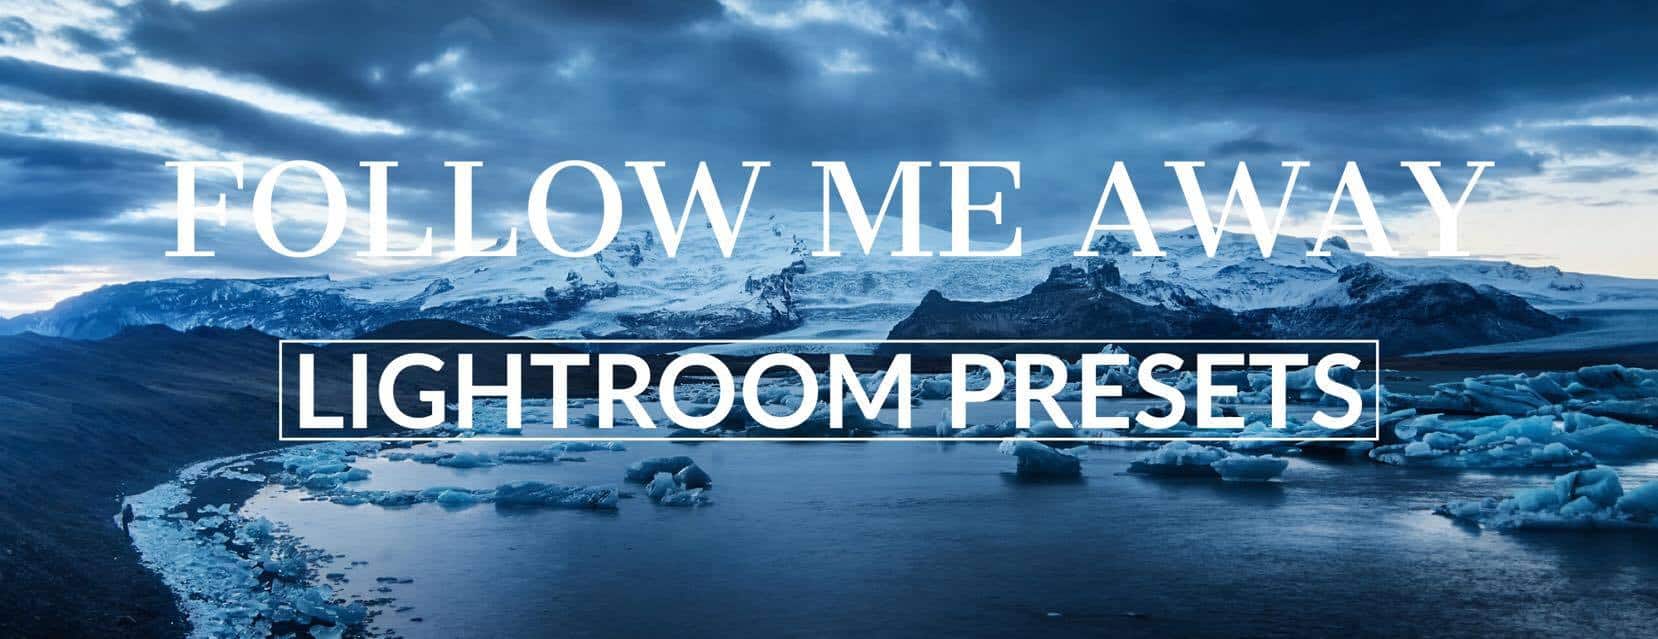 Follow Me Away Lightroom Presets Store | Custom Lightroom Presets | Best Lightroom Presets | Lightroom Presets For Sale